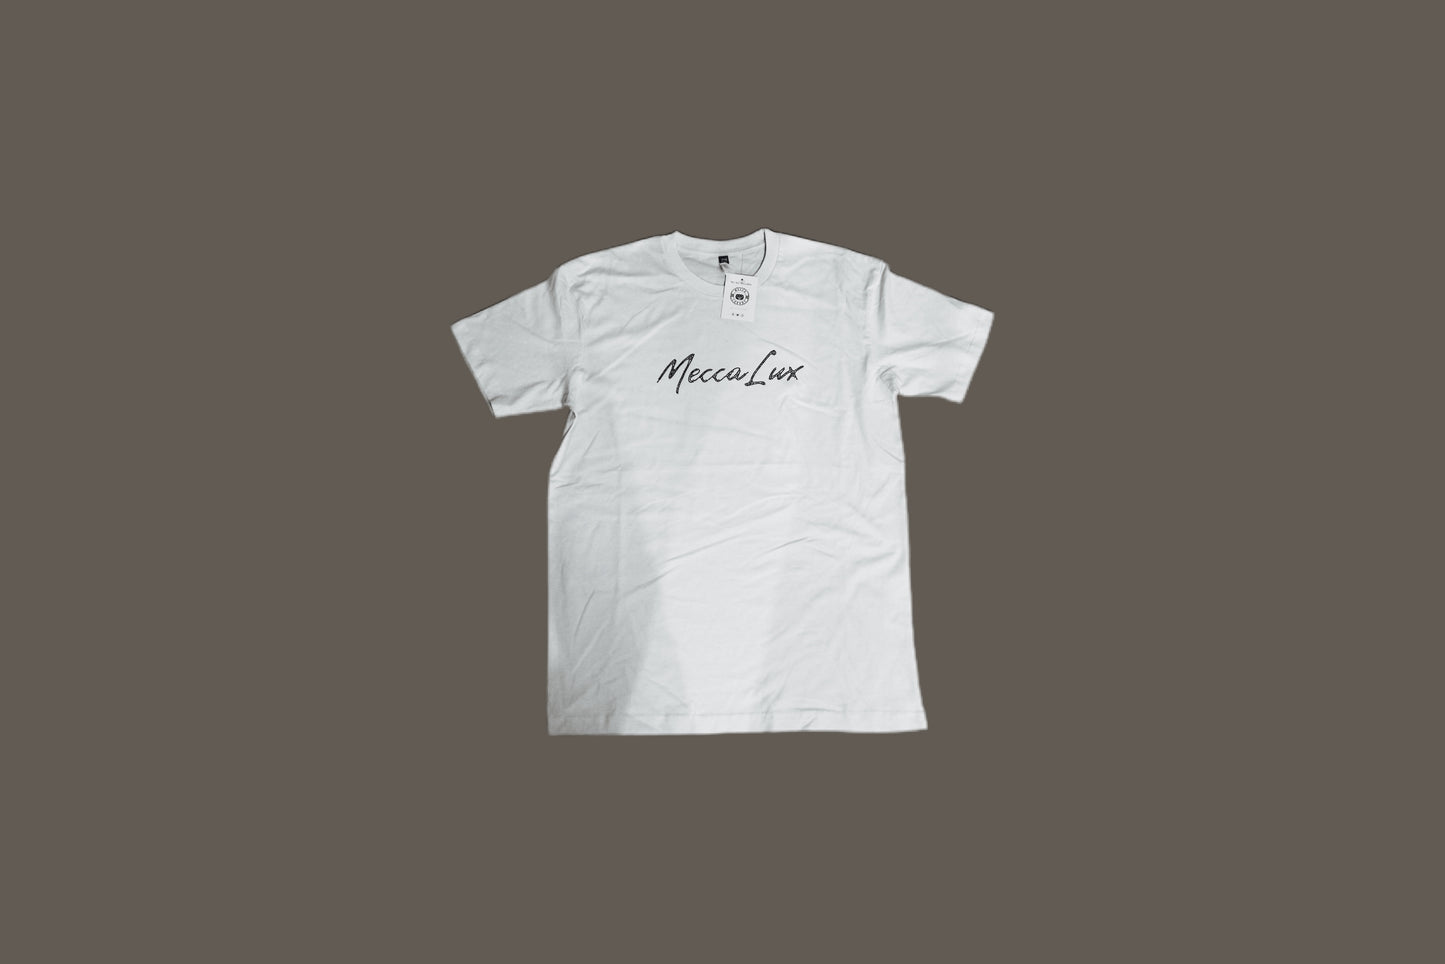 Meccalux “Rhinestone” T-shirt